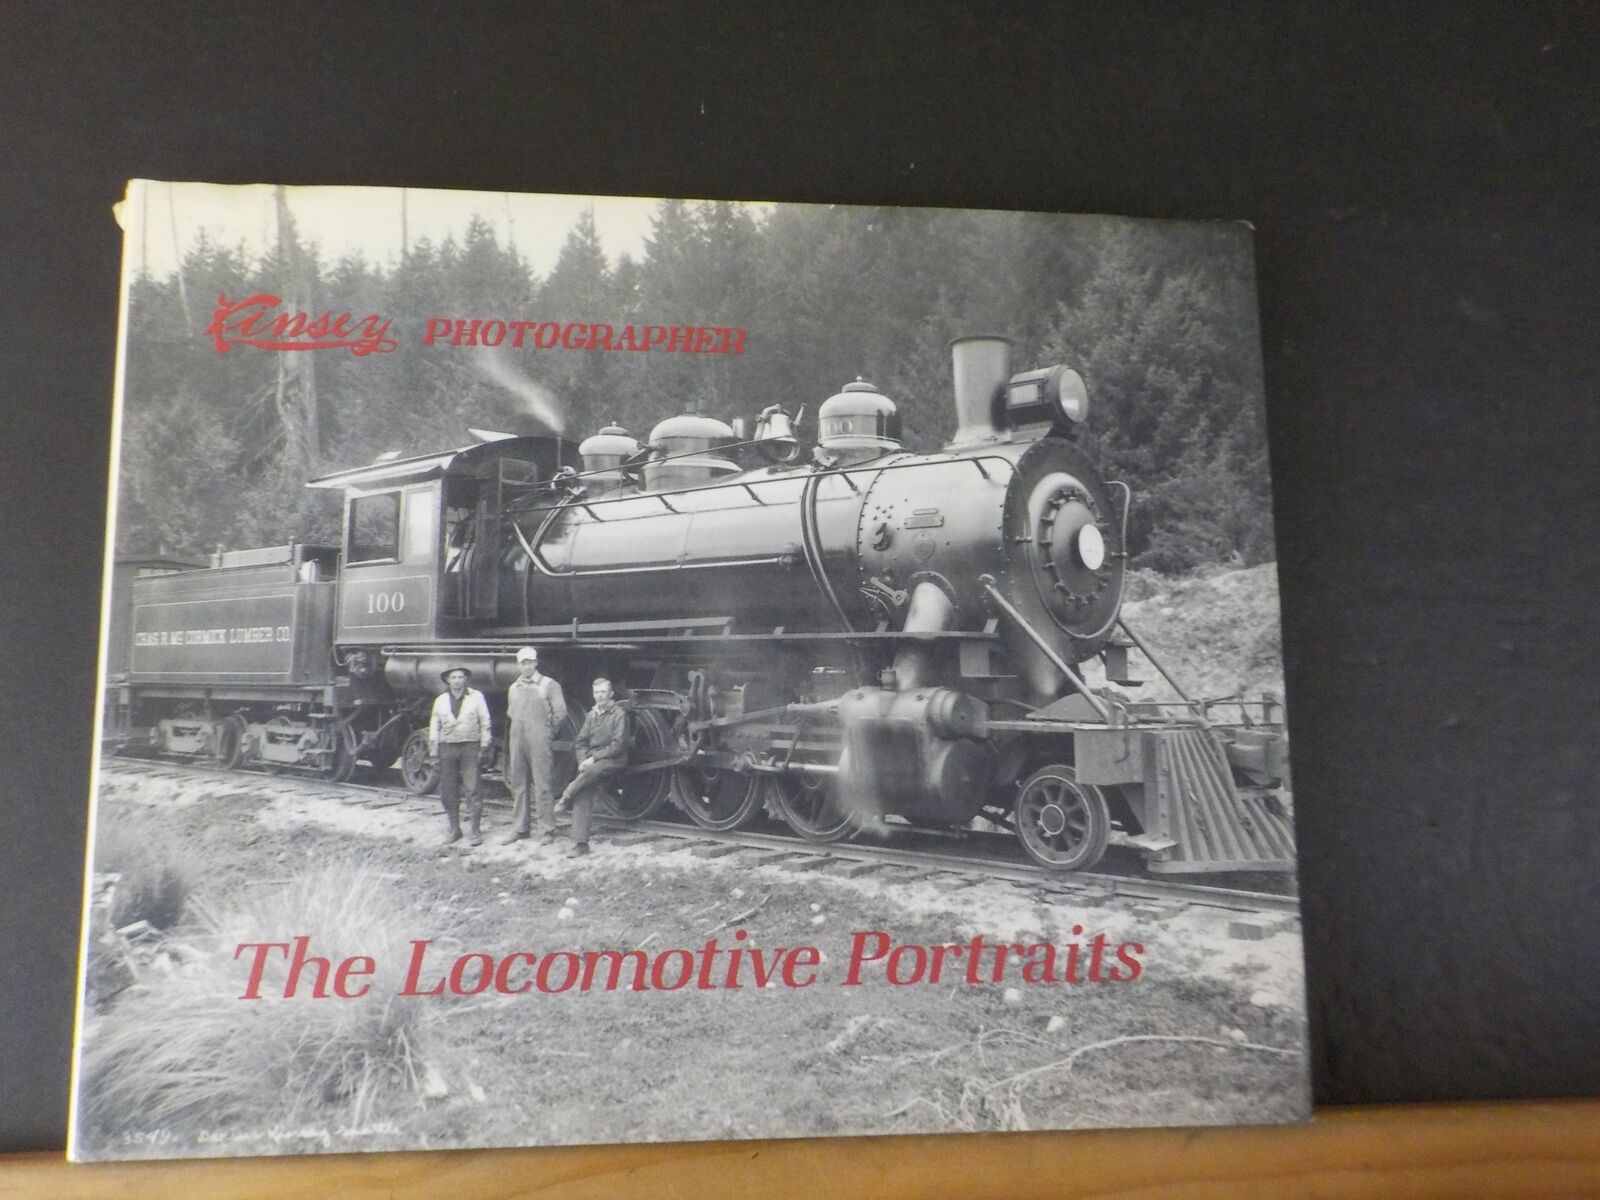 Kinsey Photographer The Locomotive Portraits Volume 3 by Bohn & Petschek